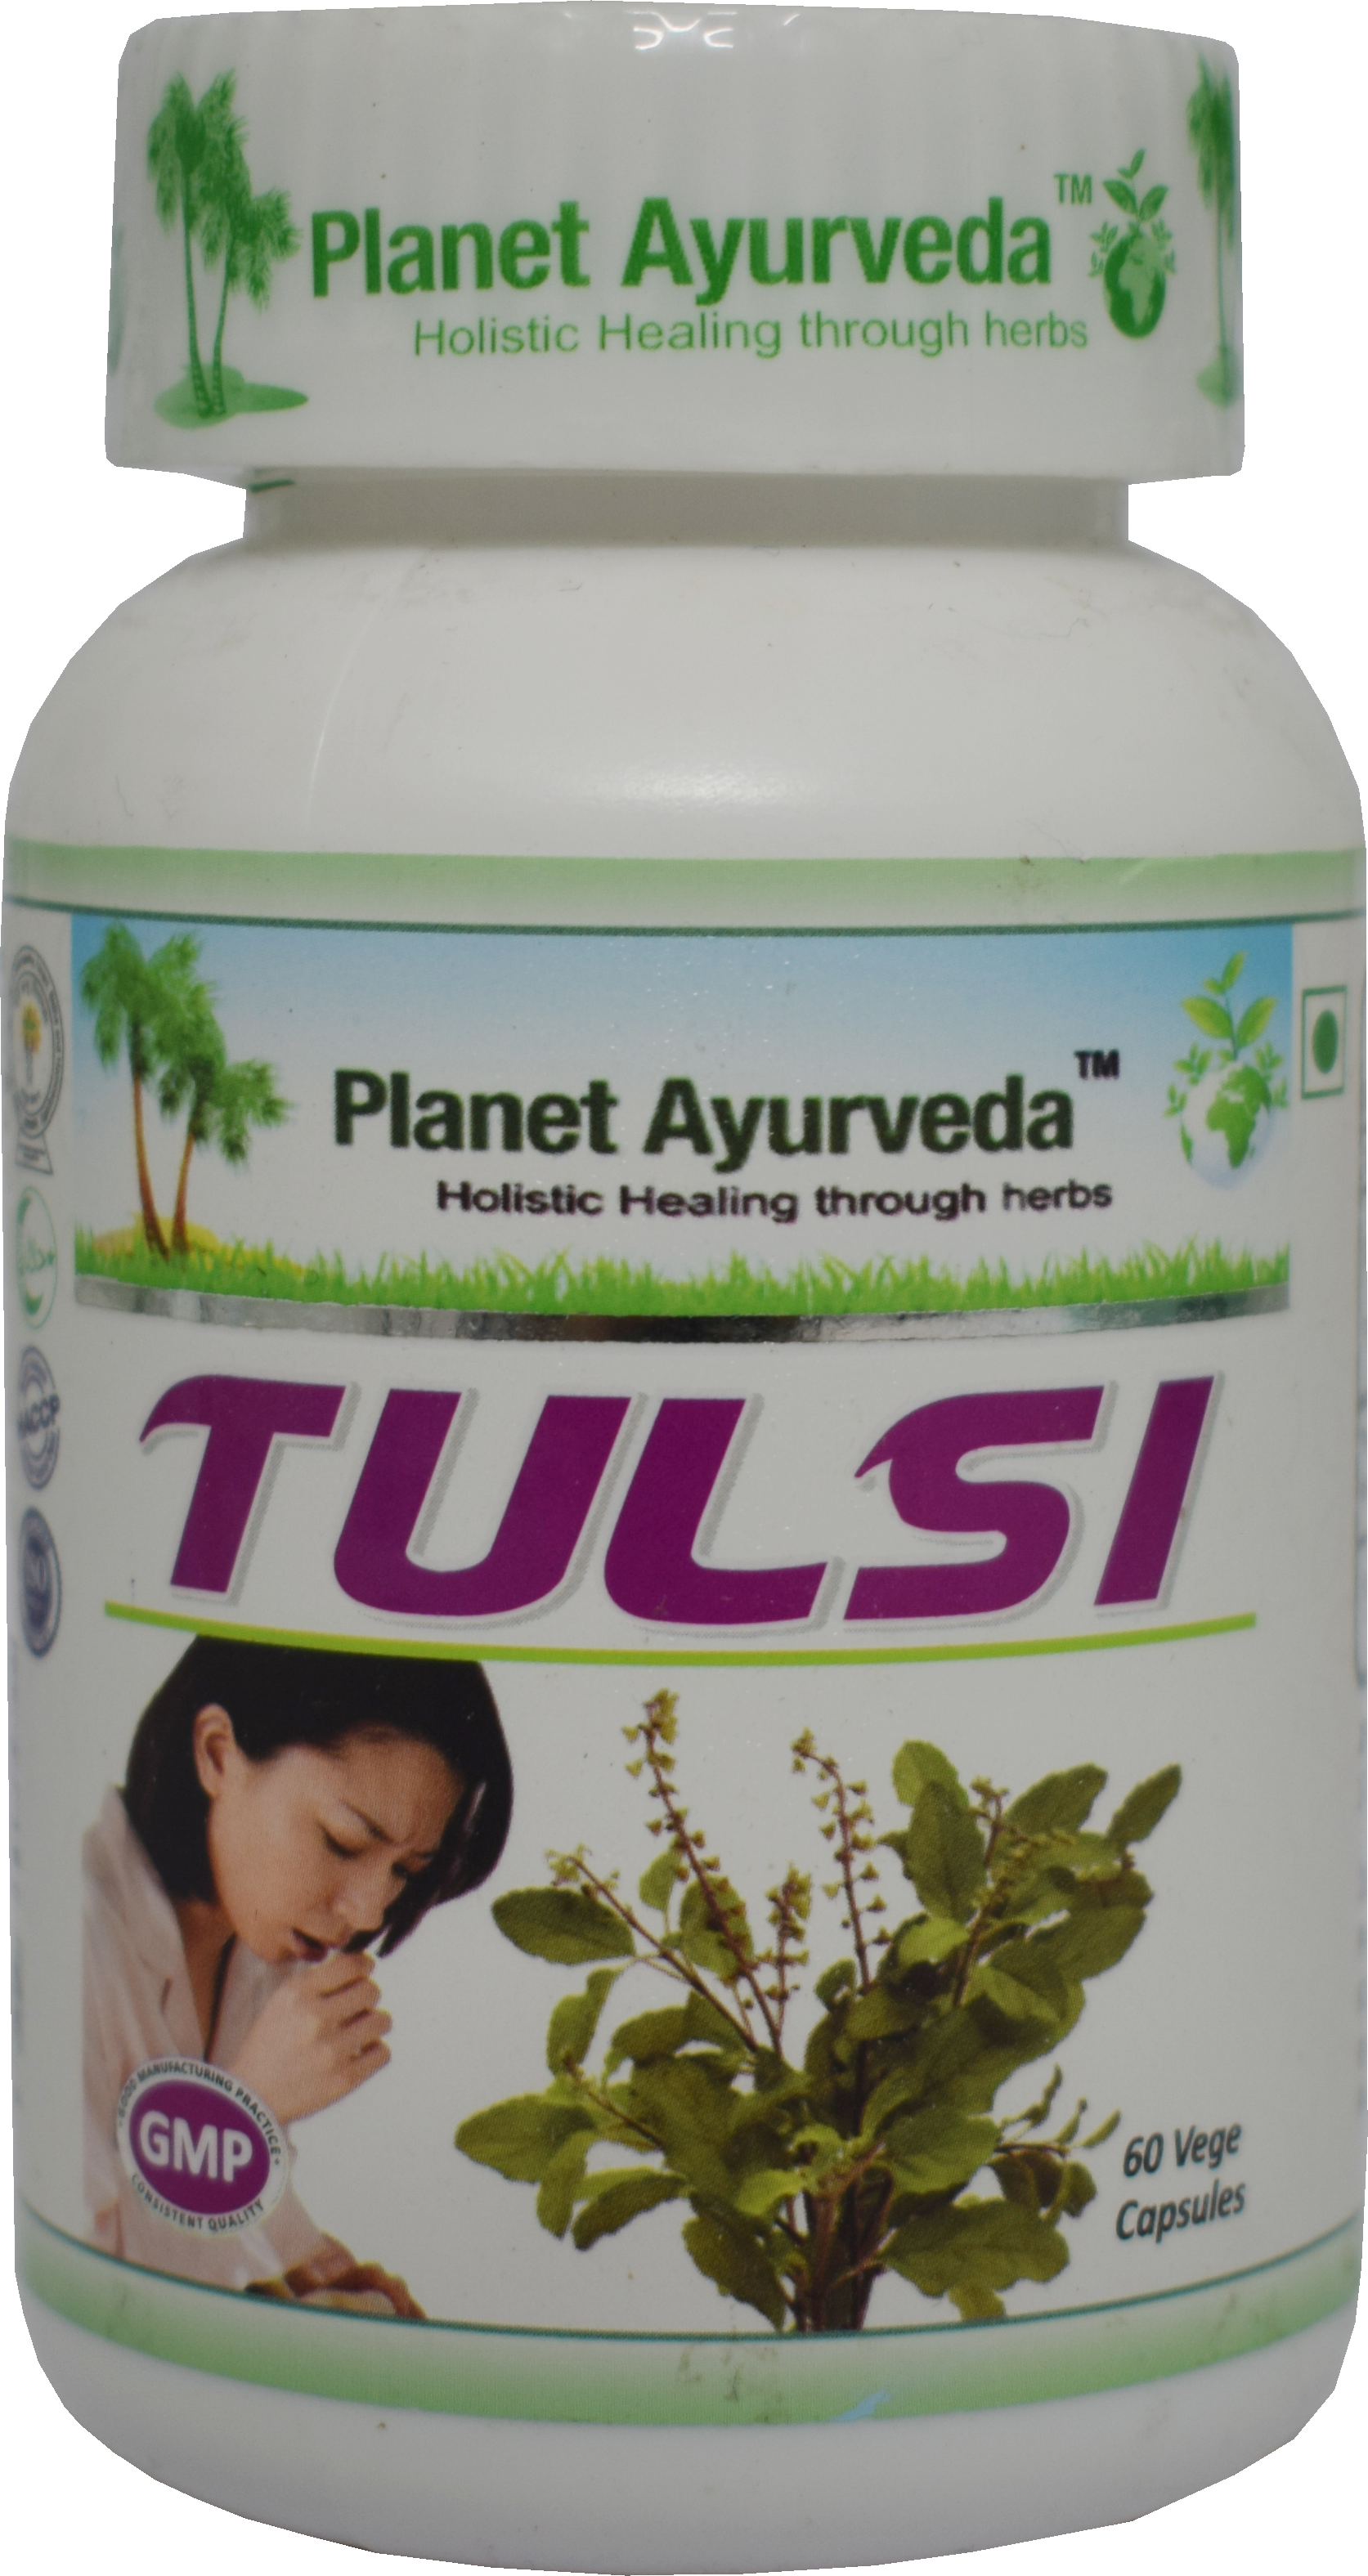 Buy Planet Ayurveda Tulsi Capsules at Best Price Online